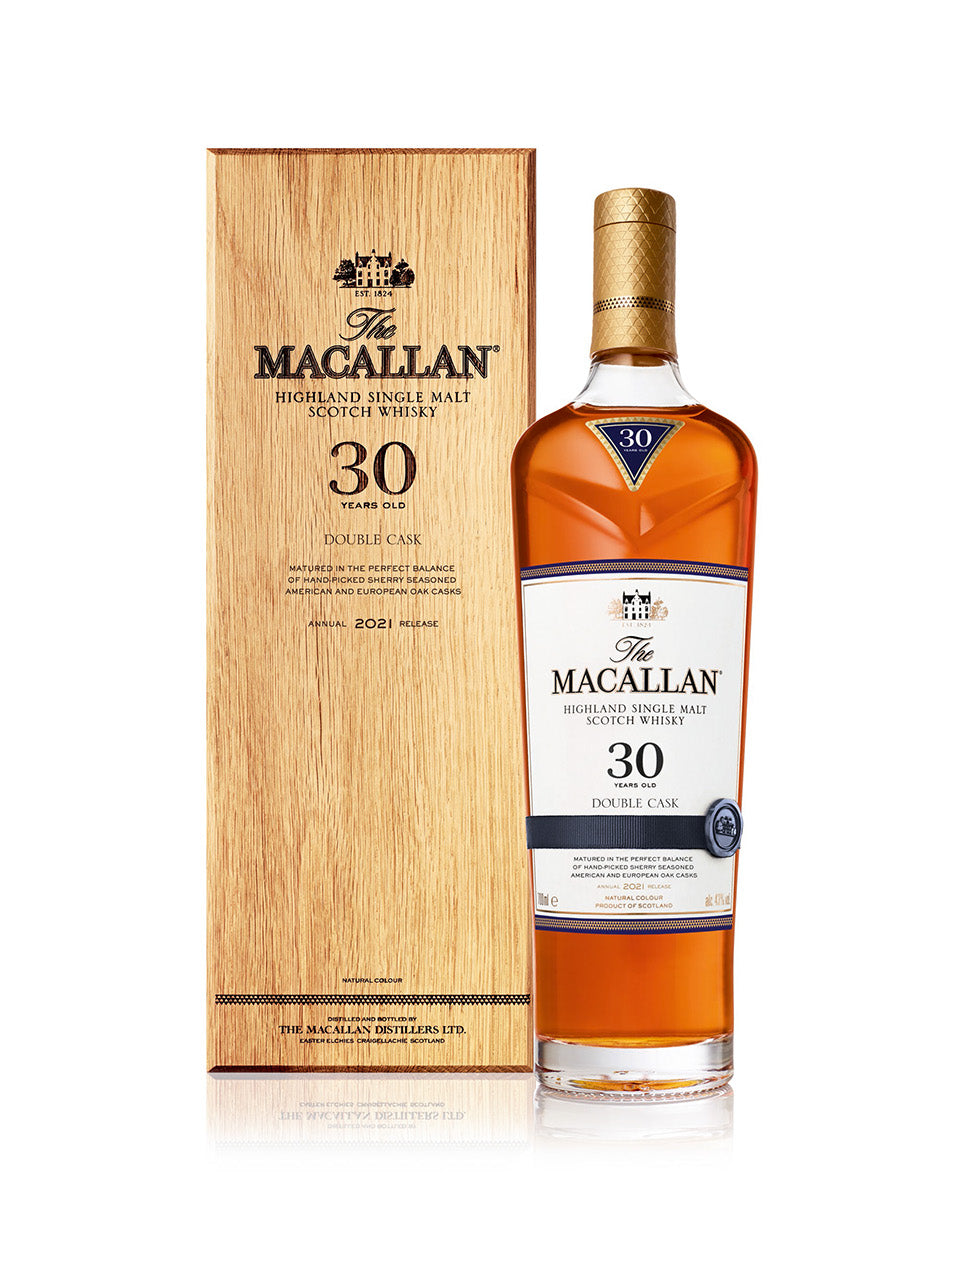 The Macallan Double Cask 30 Year Old 750 ml bottle